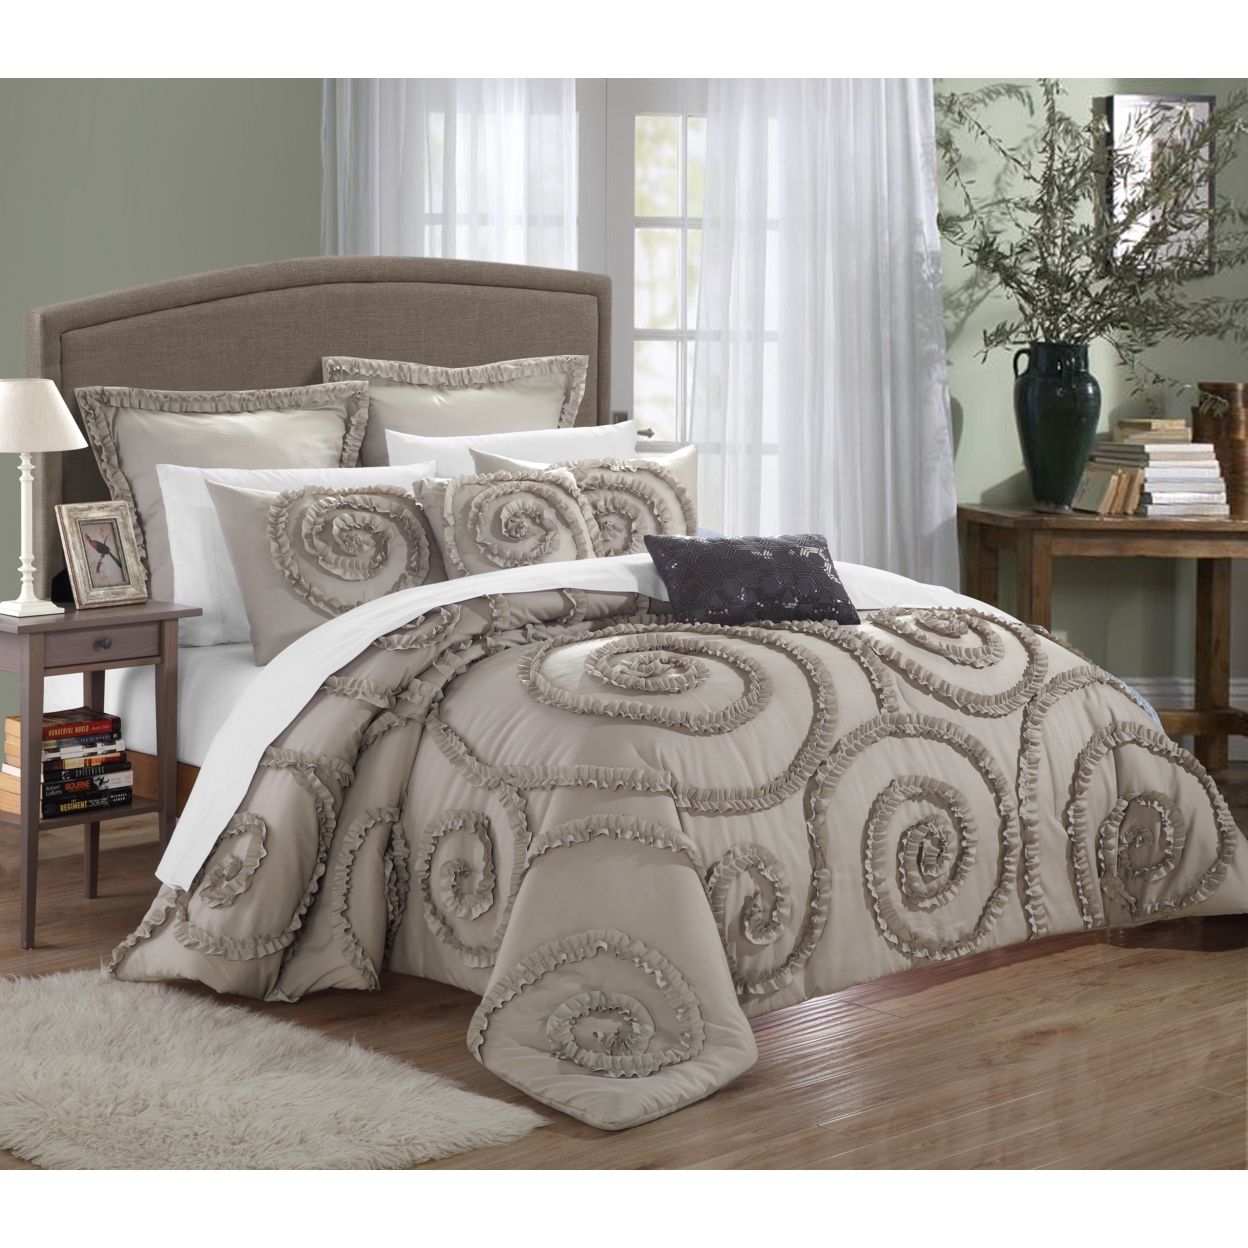 Chic Home Rosalinda 7-Piece Ruffled Embroidered Comforter Set, Mult. Colors - Beige, Queen